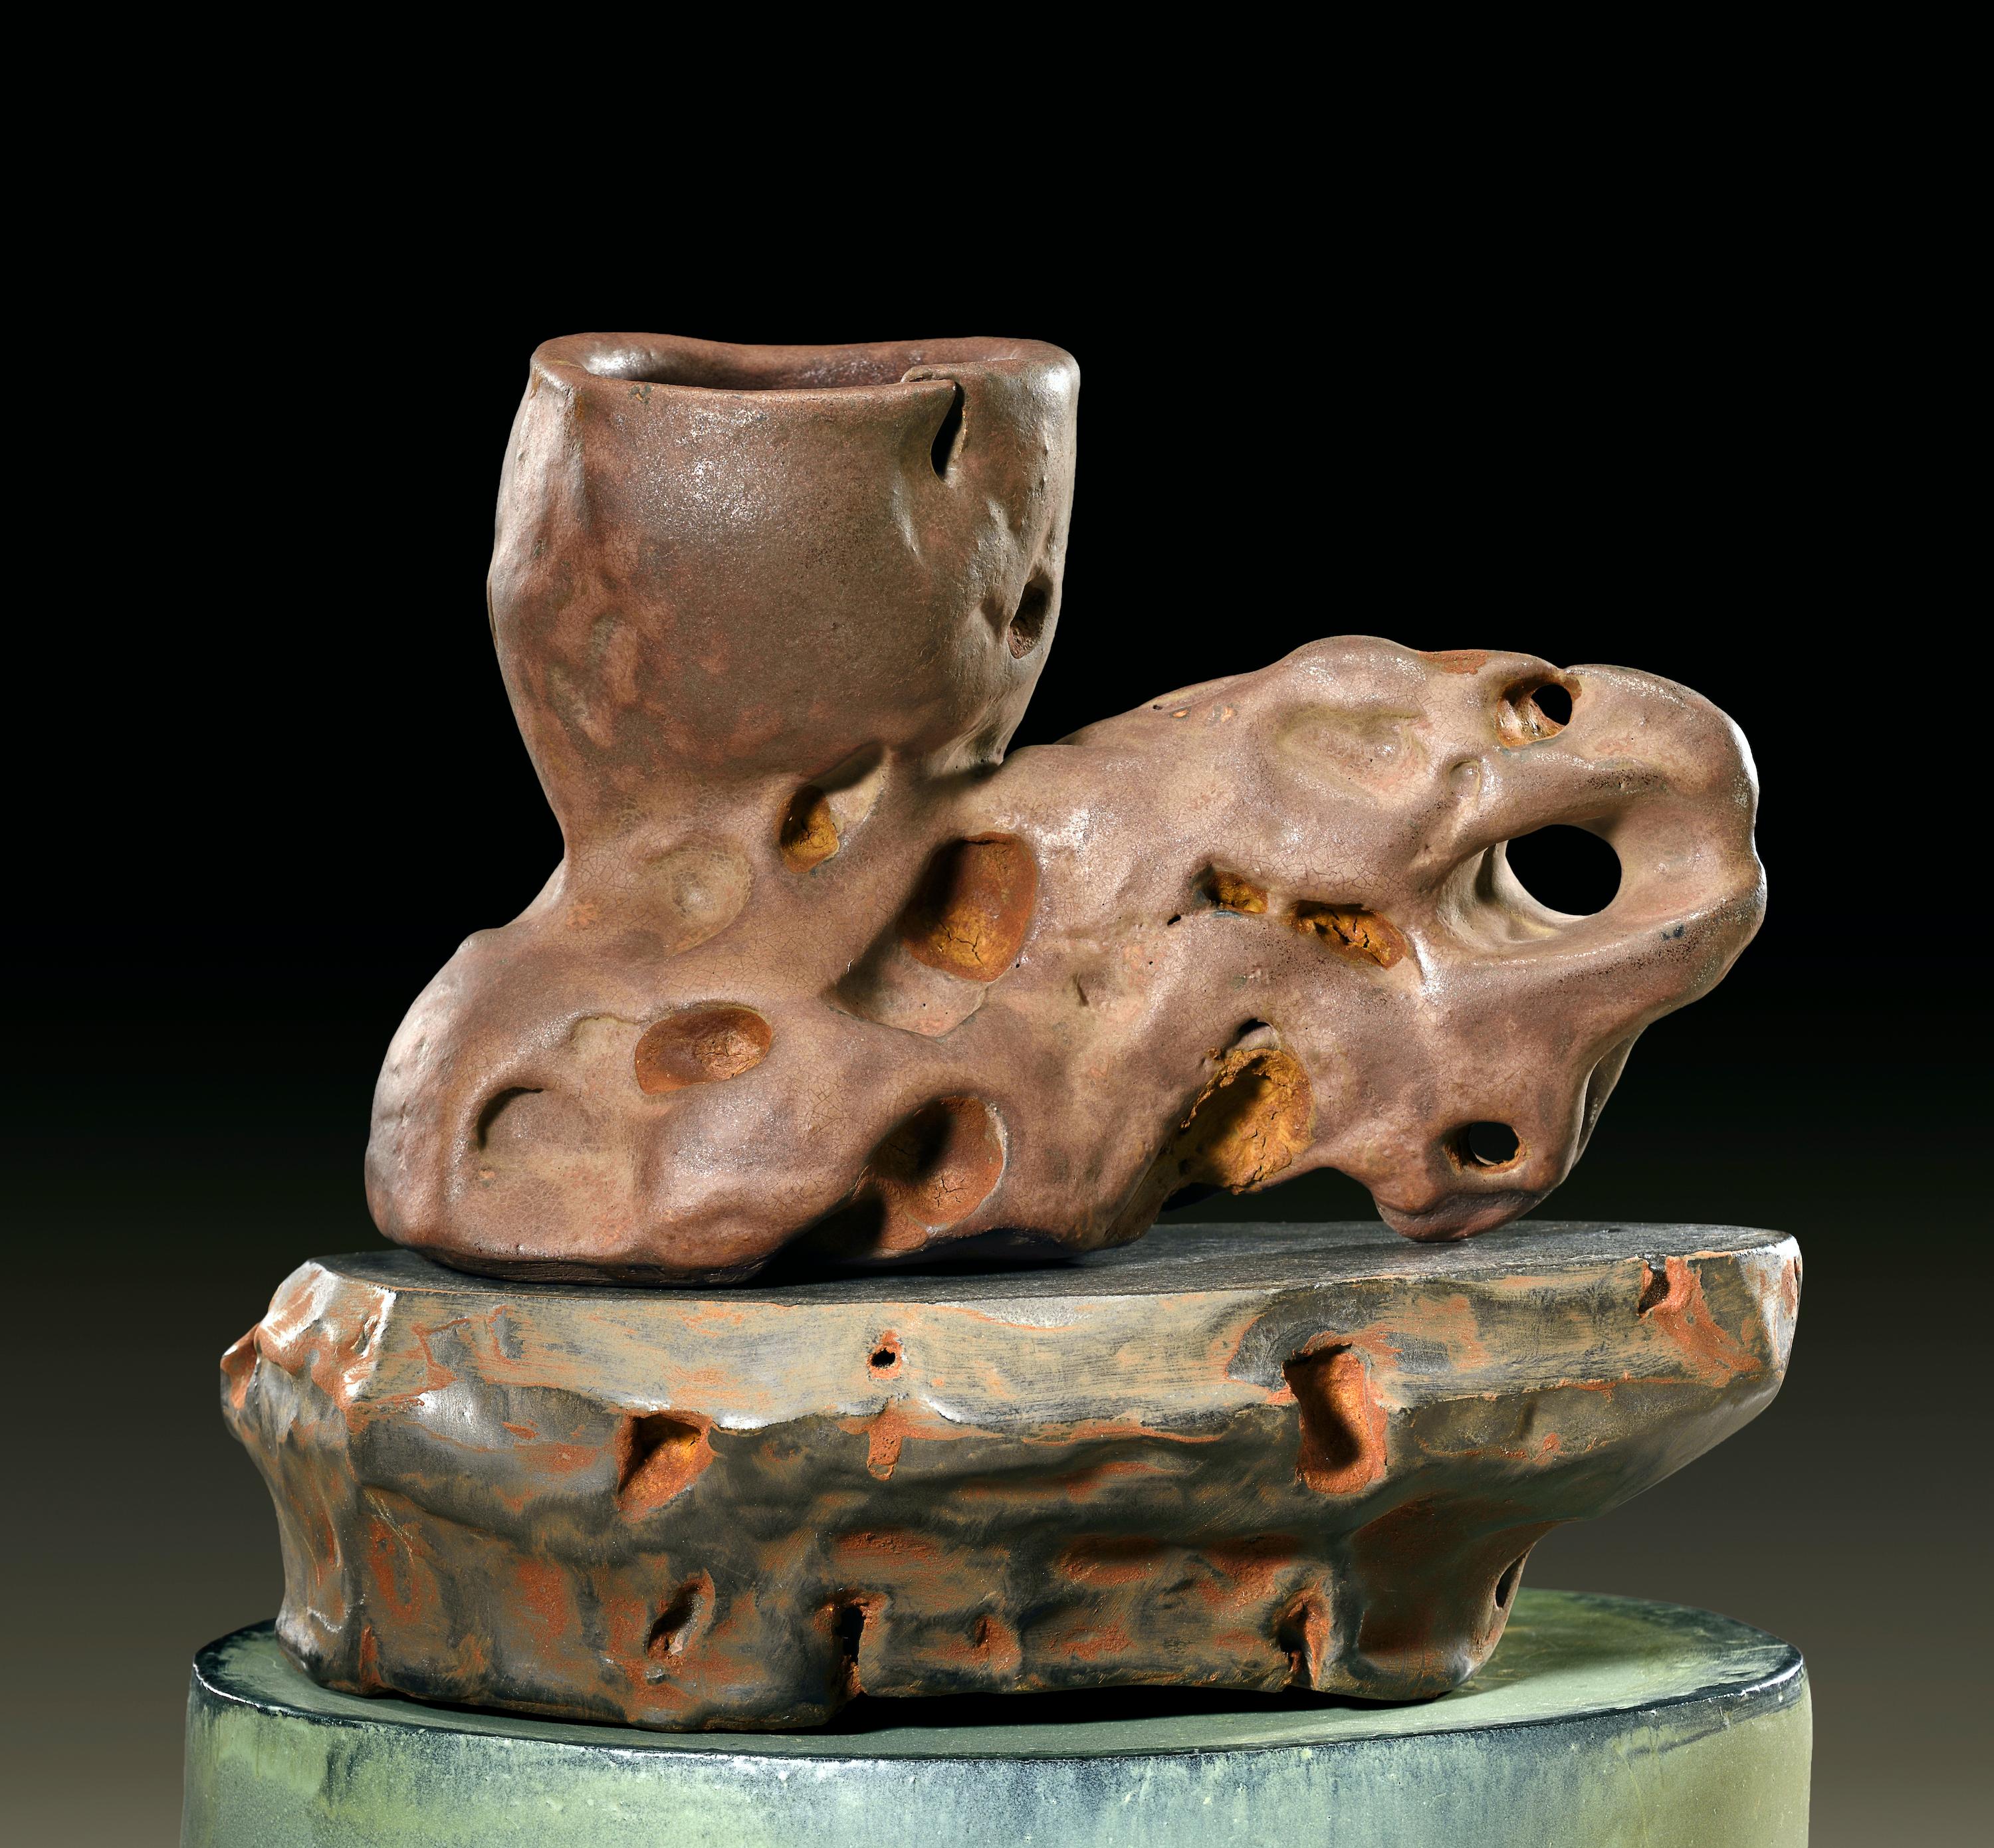 Glazed Richard Hirsch Ceramic Scholar Rock Cup Sculpture, 2018 For Sale